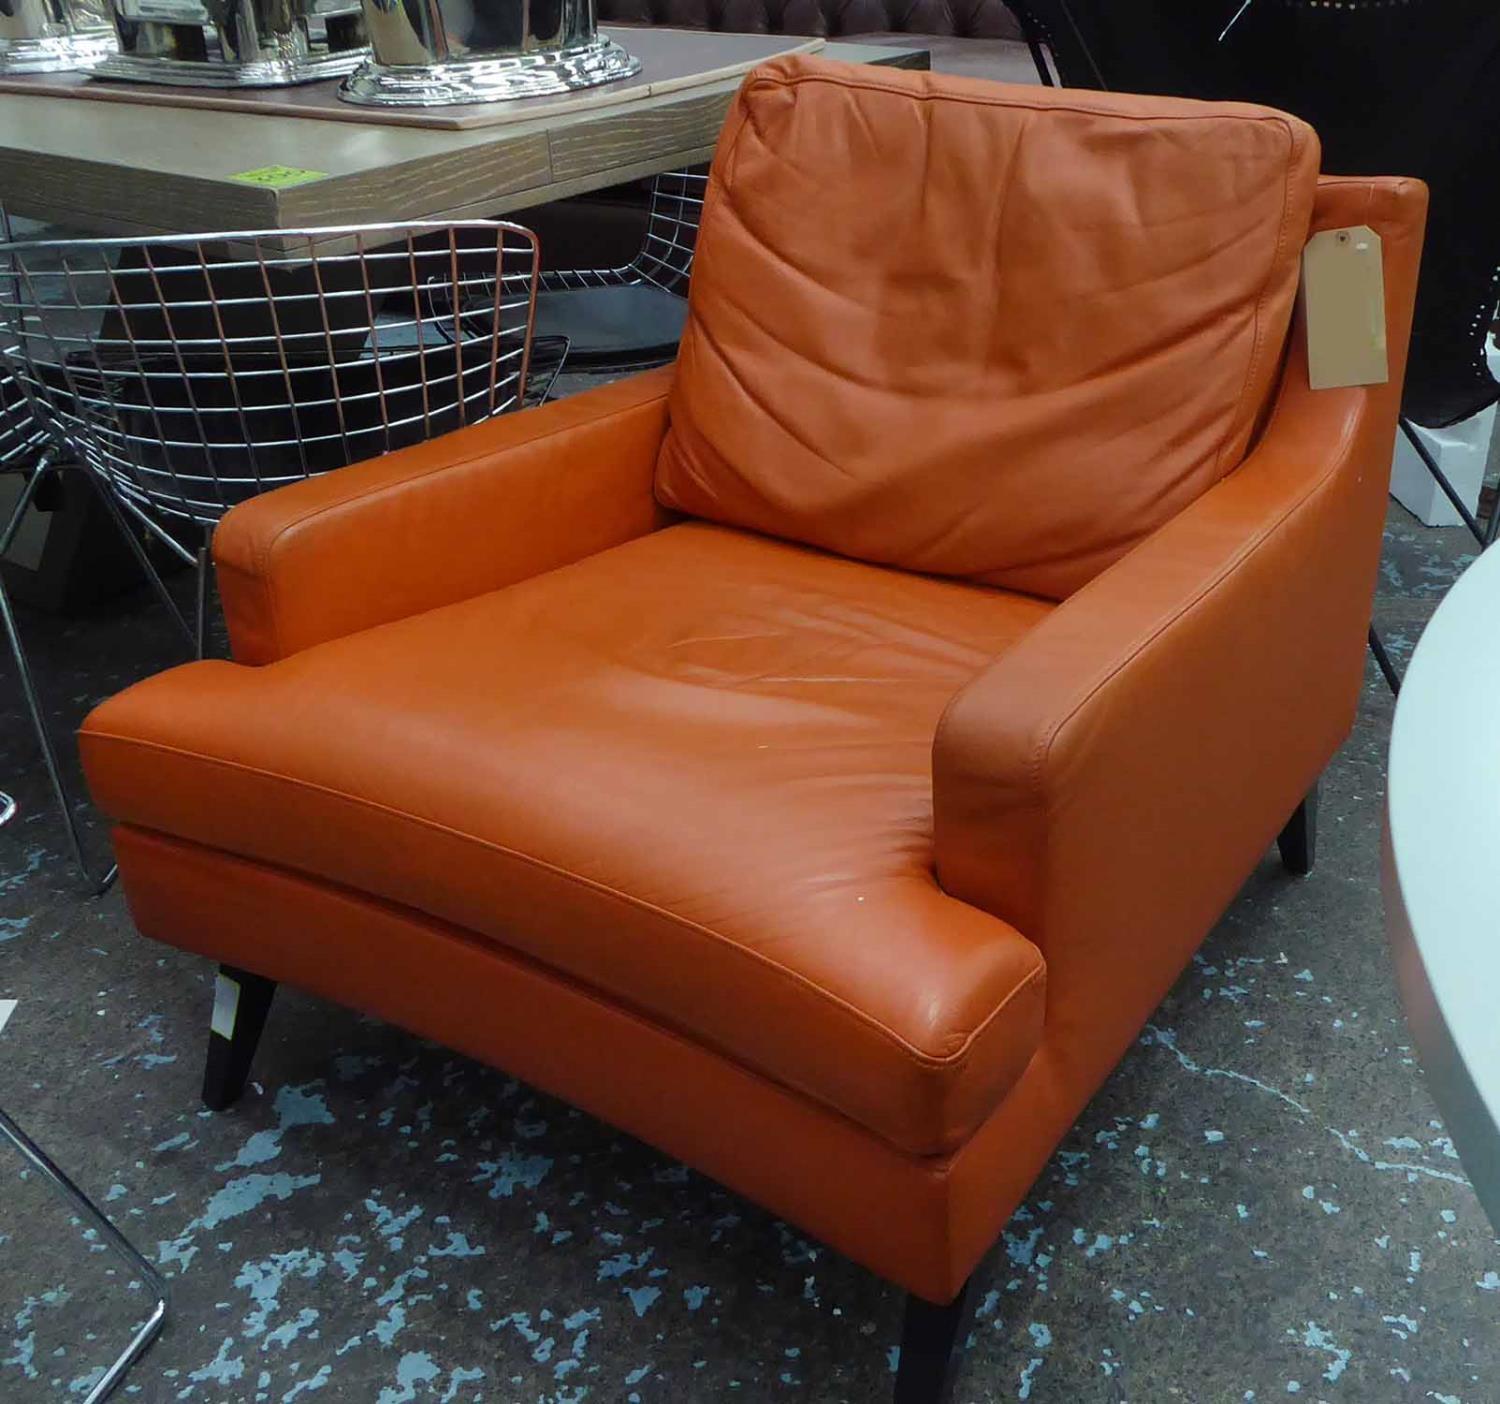 LIGNE ROSET ARMCHAIRS, a pair, orange leather upholstered, 80cm x 93cm x 72cm H. (2) - Image 2 of 4